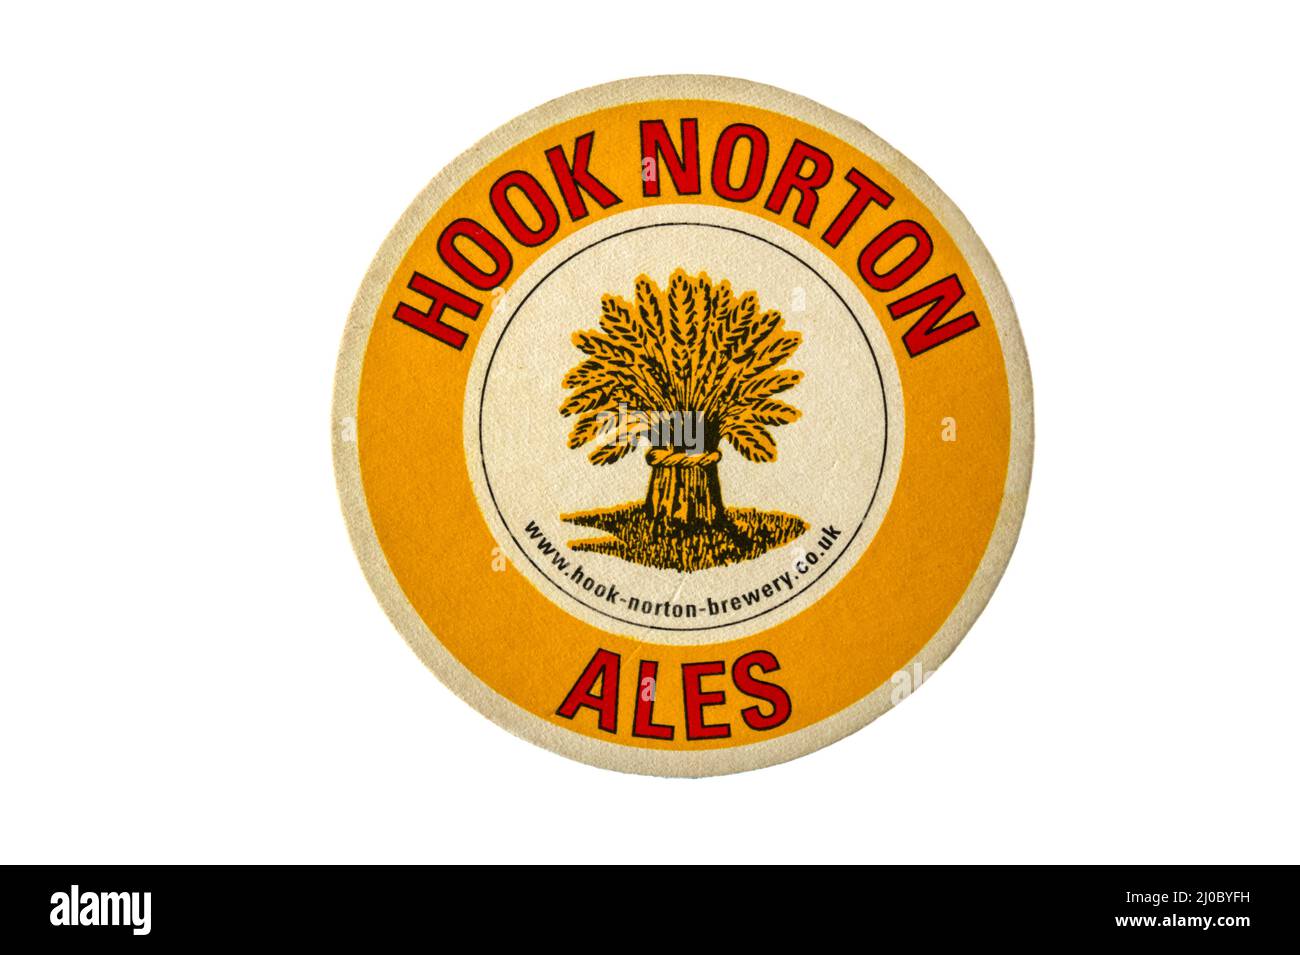 A beer mat advertising Hook Norton Ales. Stock Photo